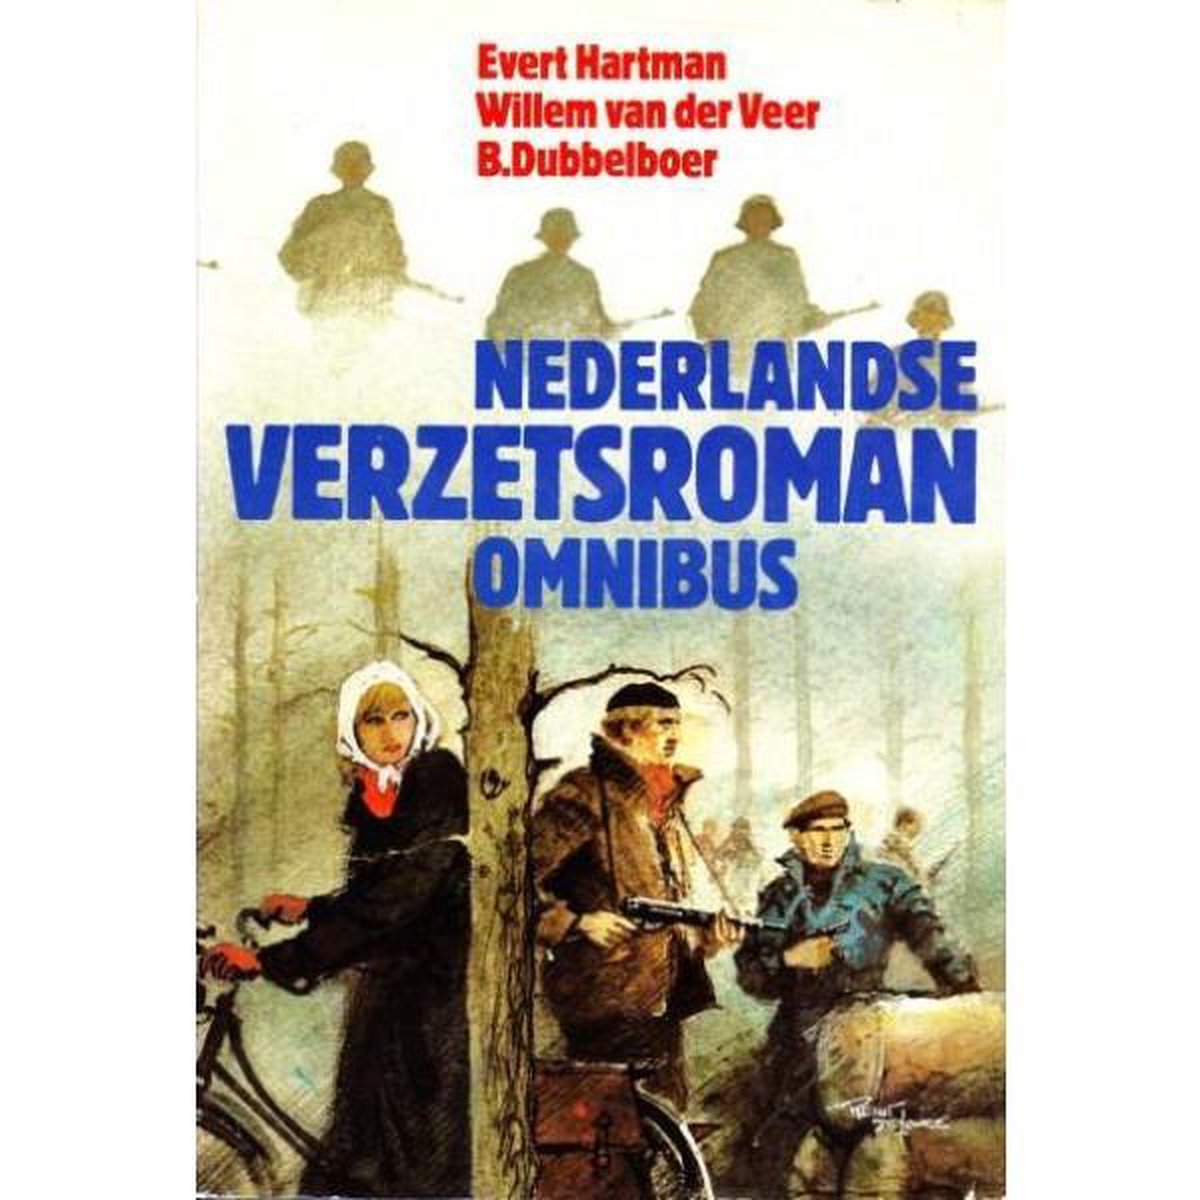 Nederlandse Verzetsroman Omnibus